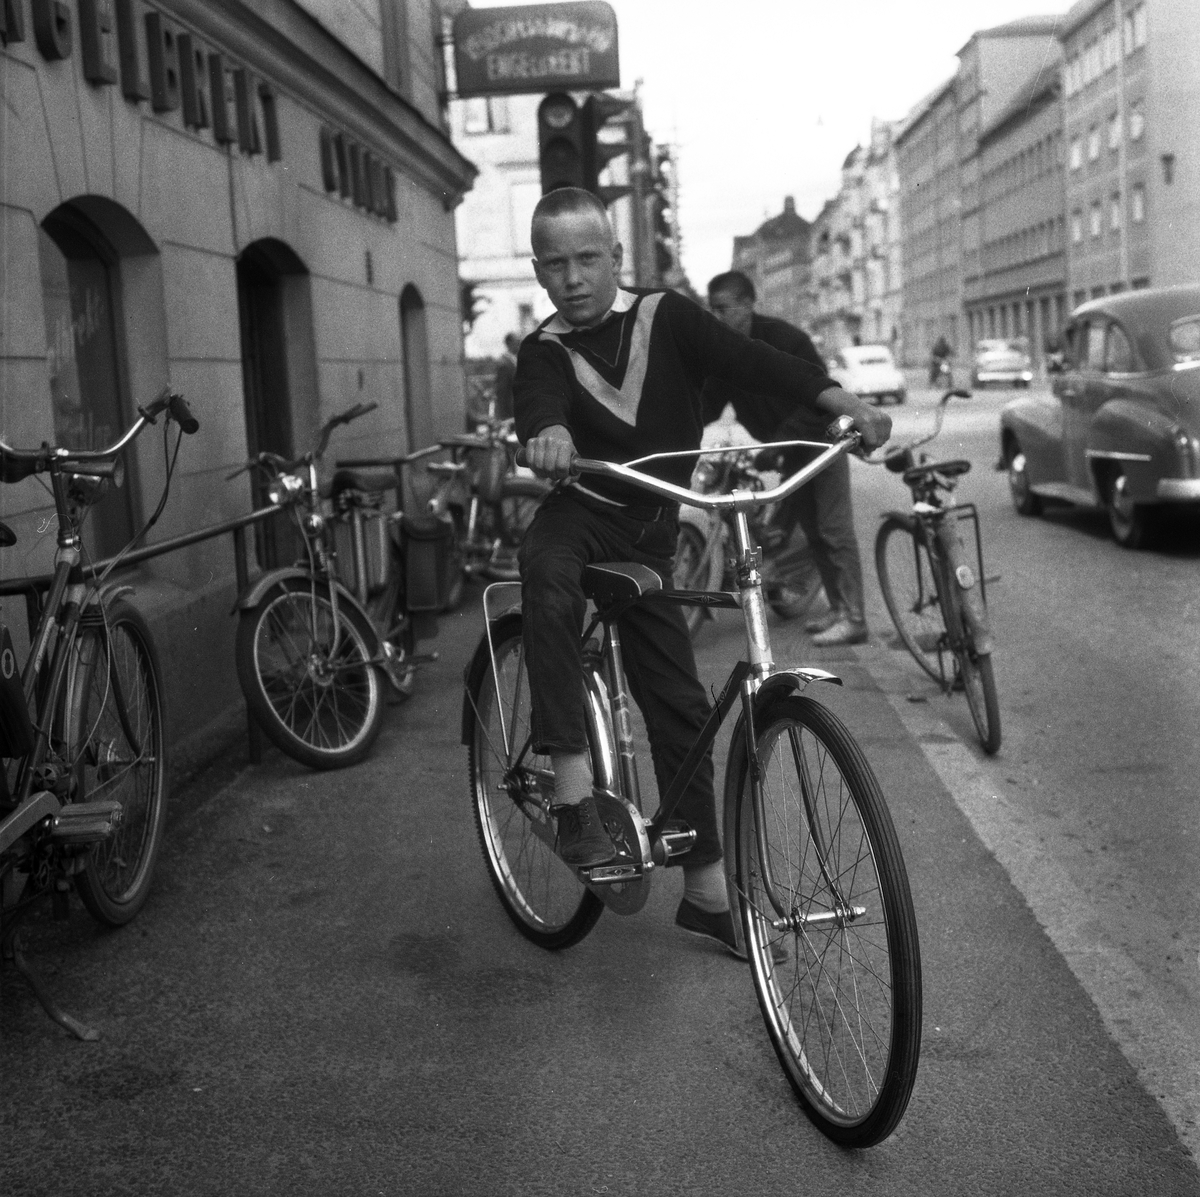 Cykeln åter till heders. 
16 juli 1959.